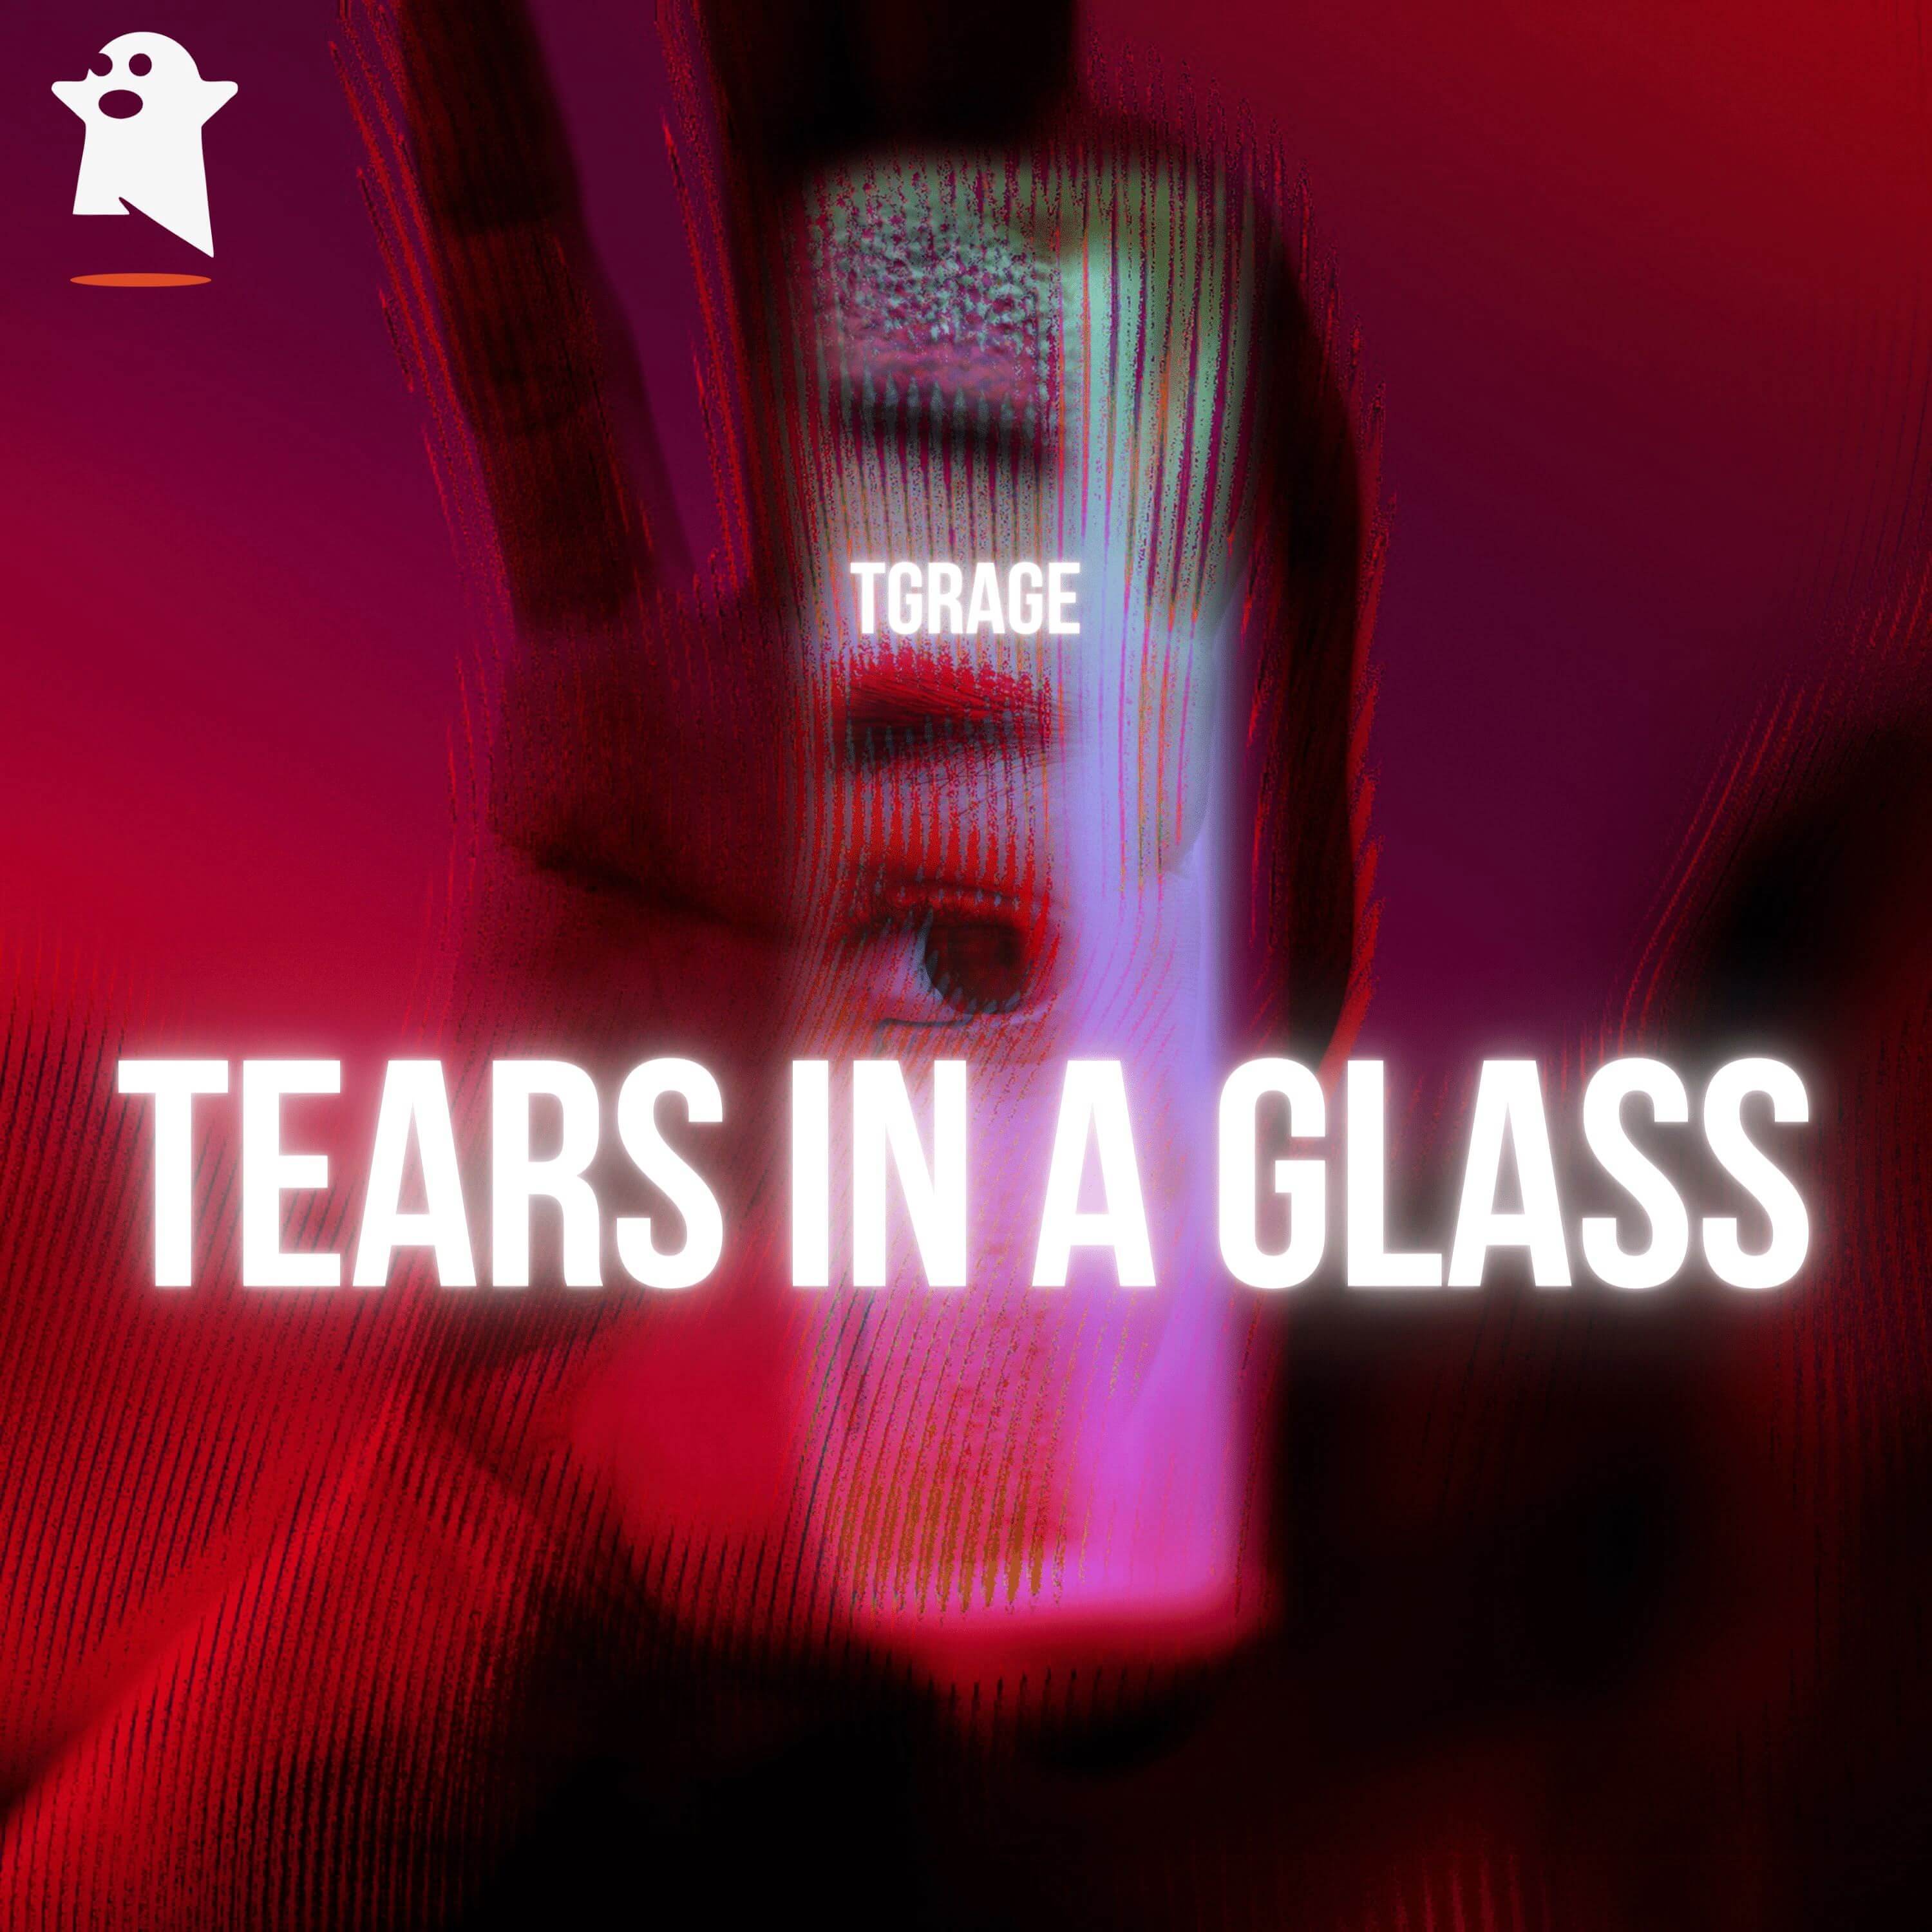 Tears in a glass